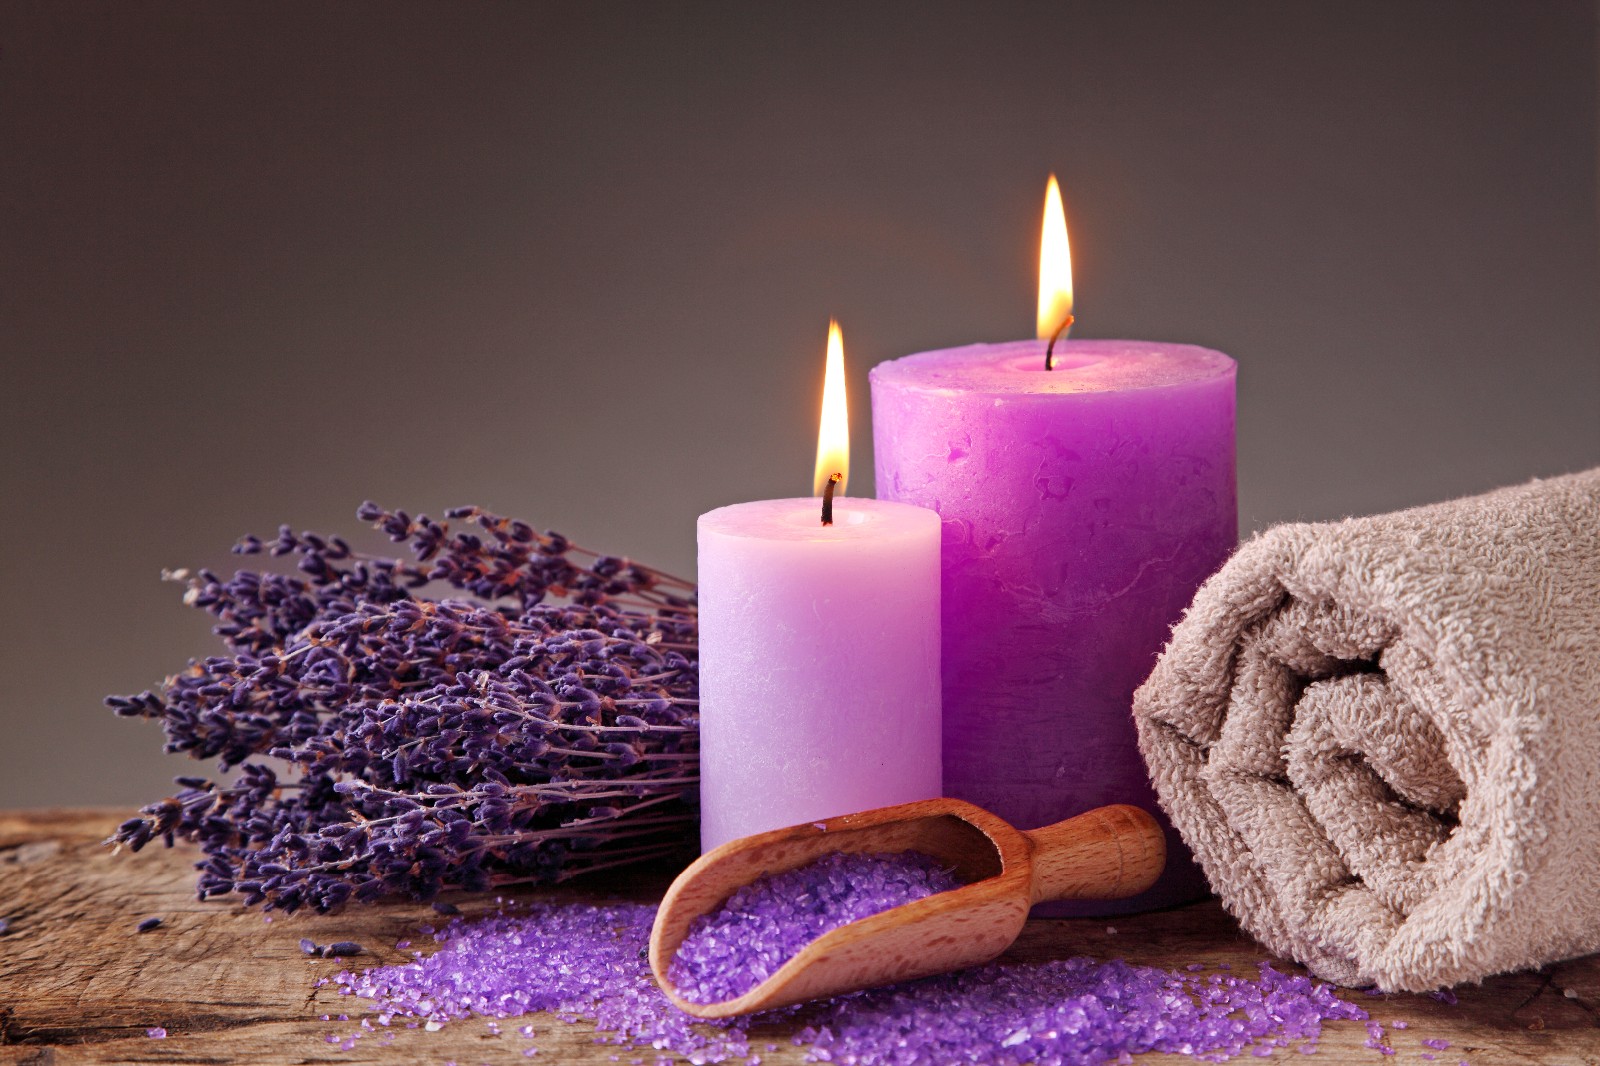 Hot Candle Delight Pedicure (30 min massage)